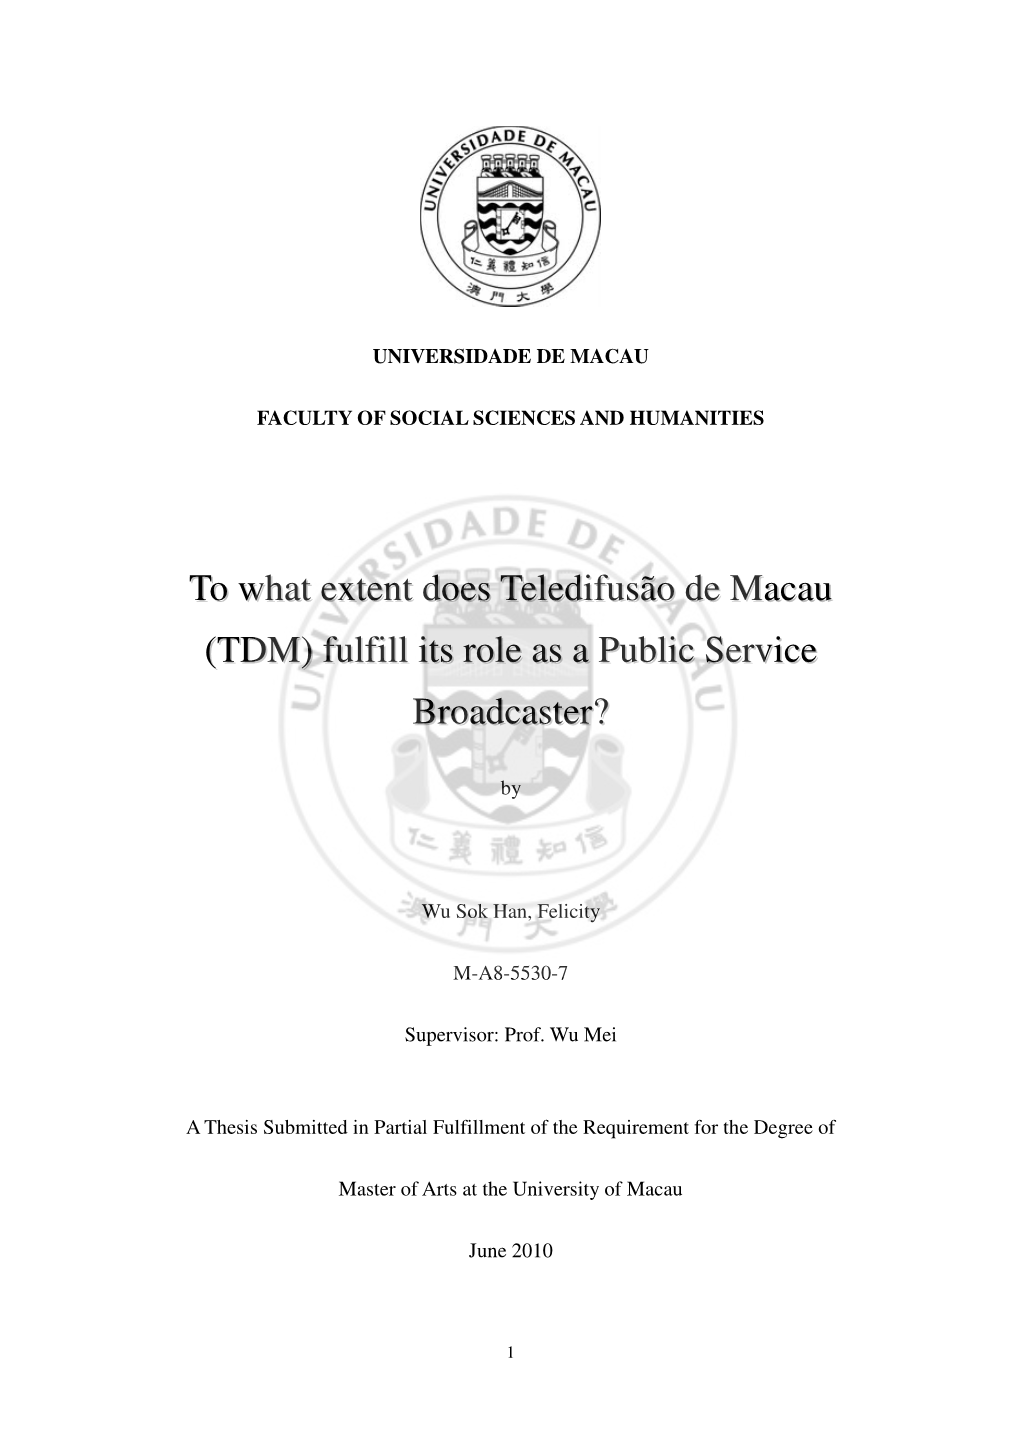 To What Extent Does Teledifusão De Macau (TDM) Fulfill Its Role As a Public Service Broadcaster?